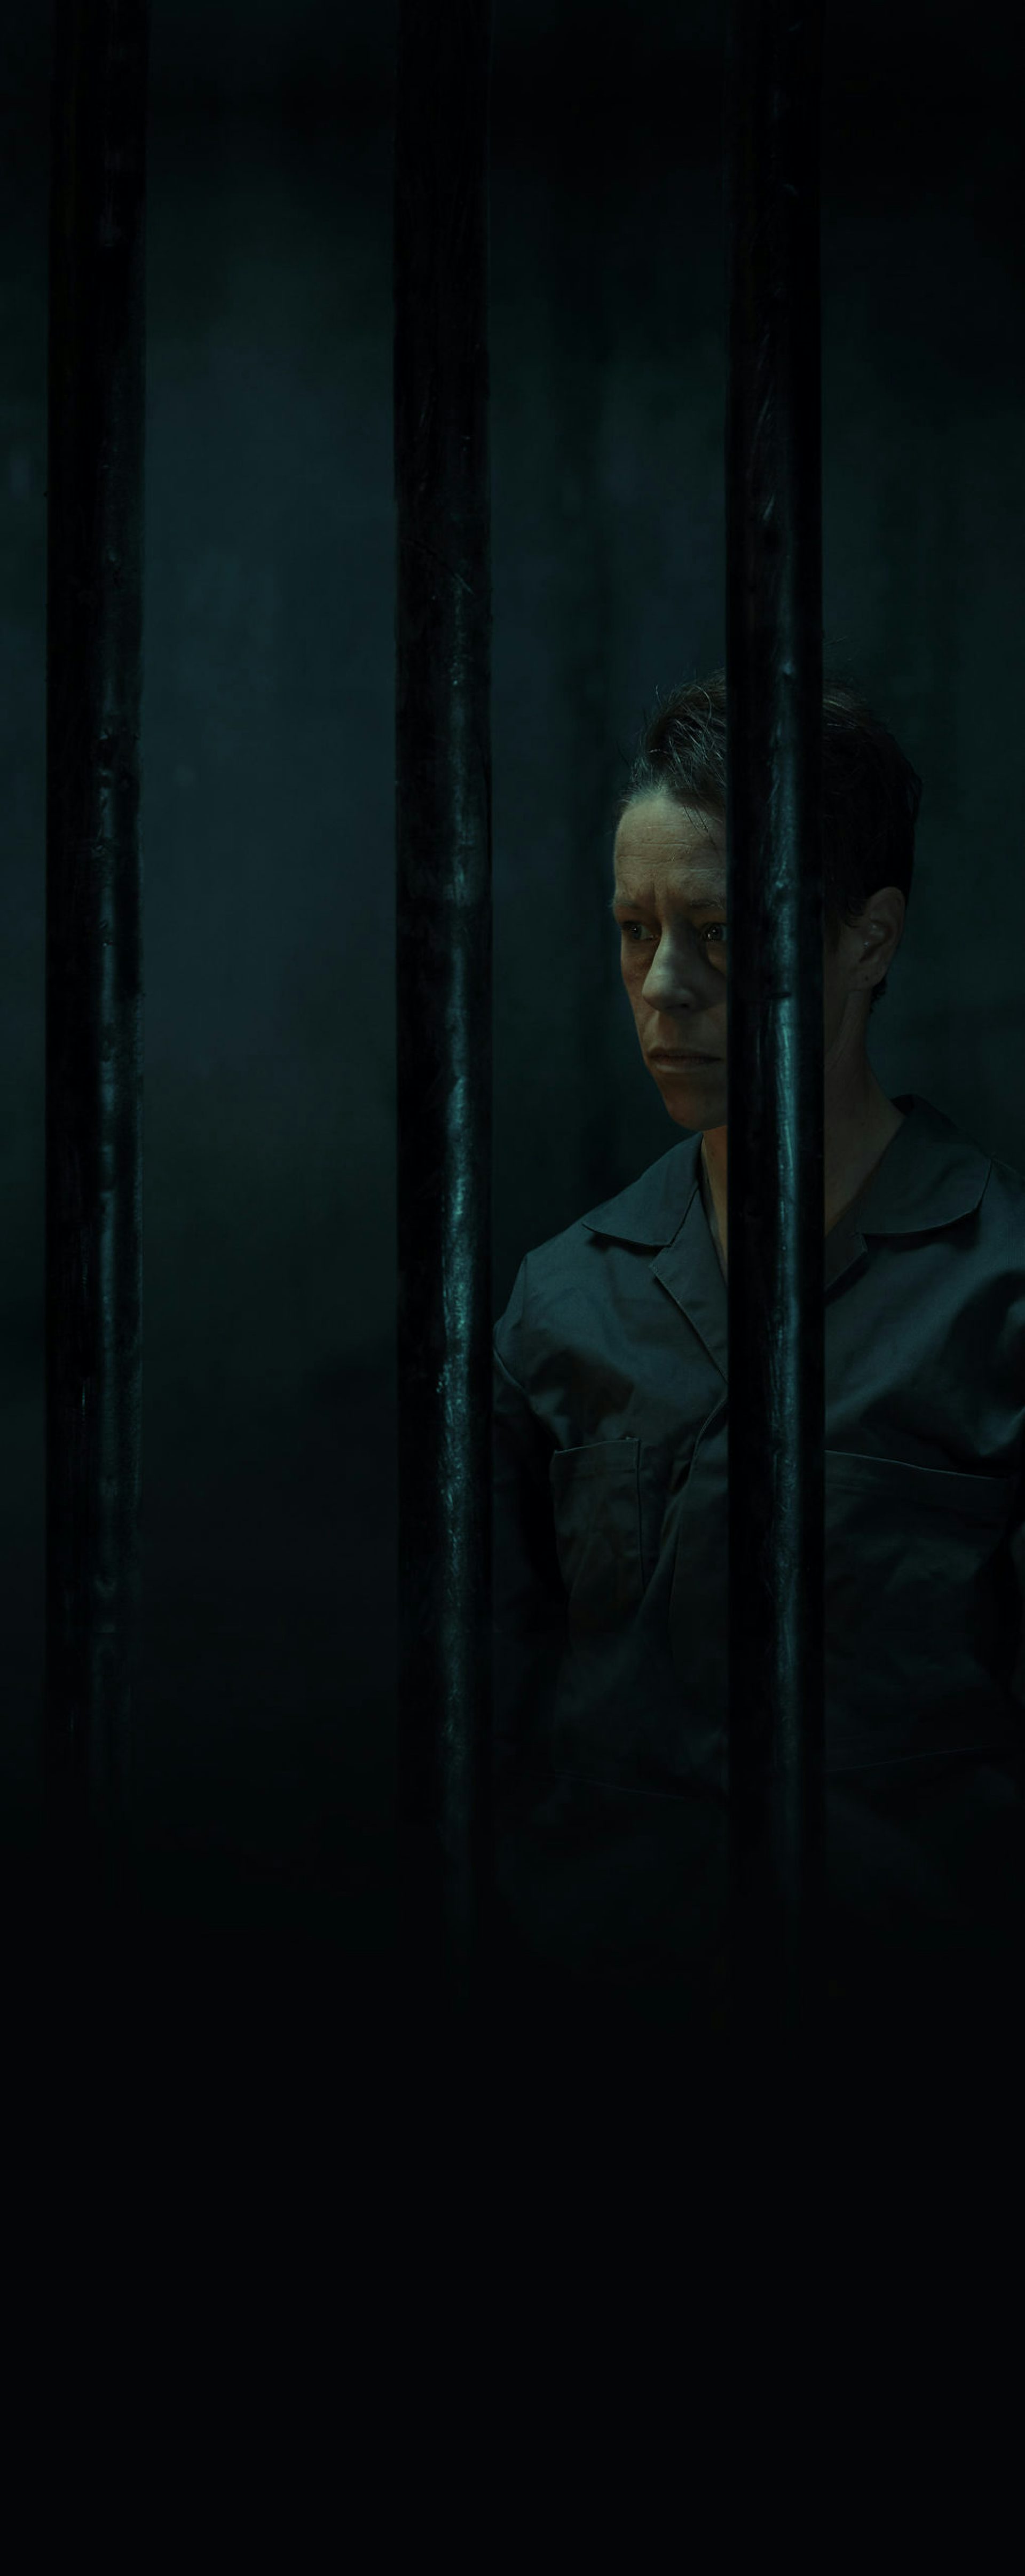 A non-binary person in a dark jail cell